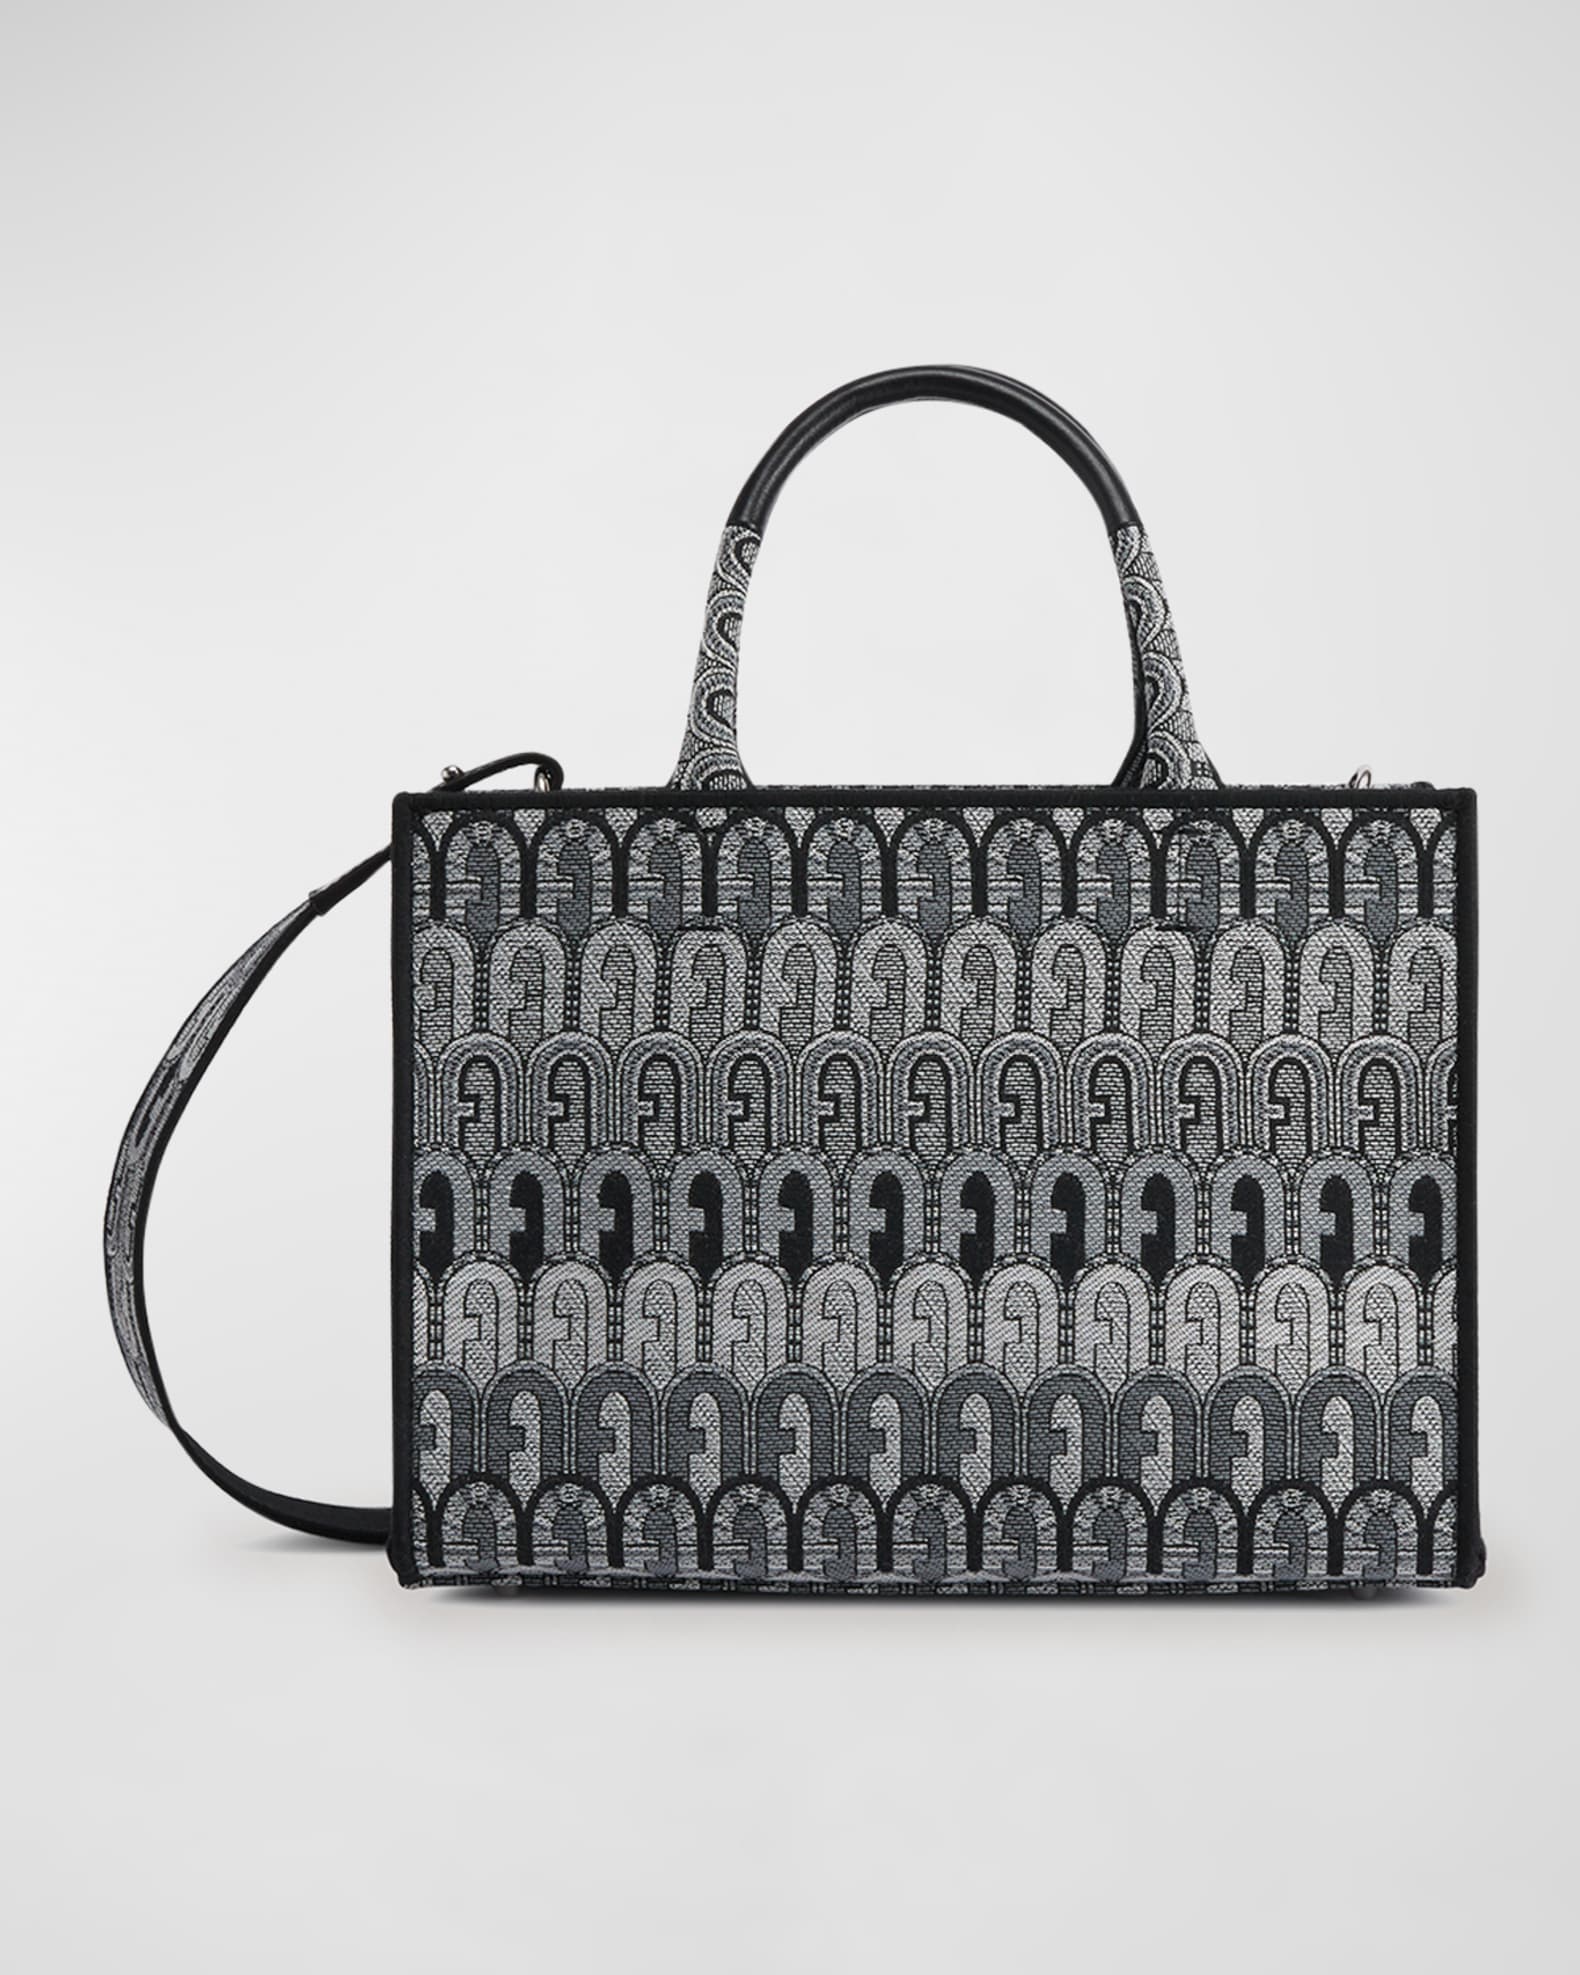 Furla woven-detail Leather Tote Bag - Farfetch